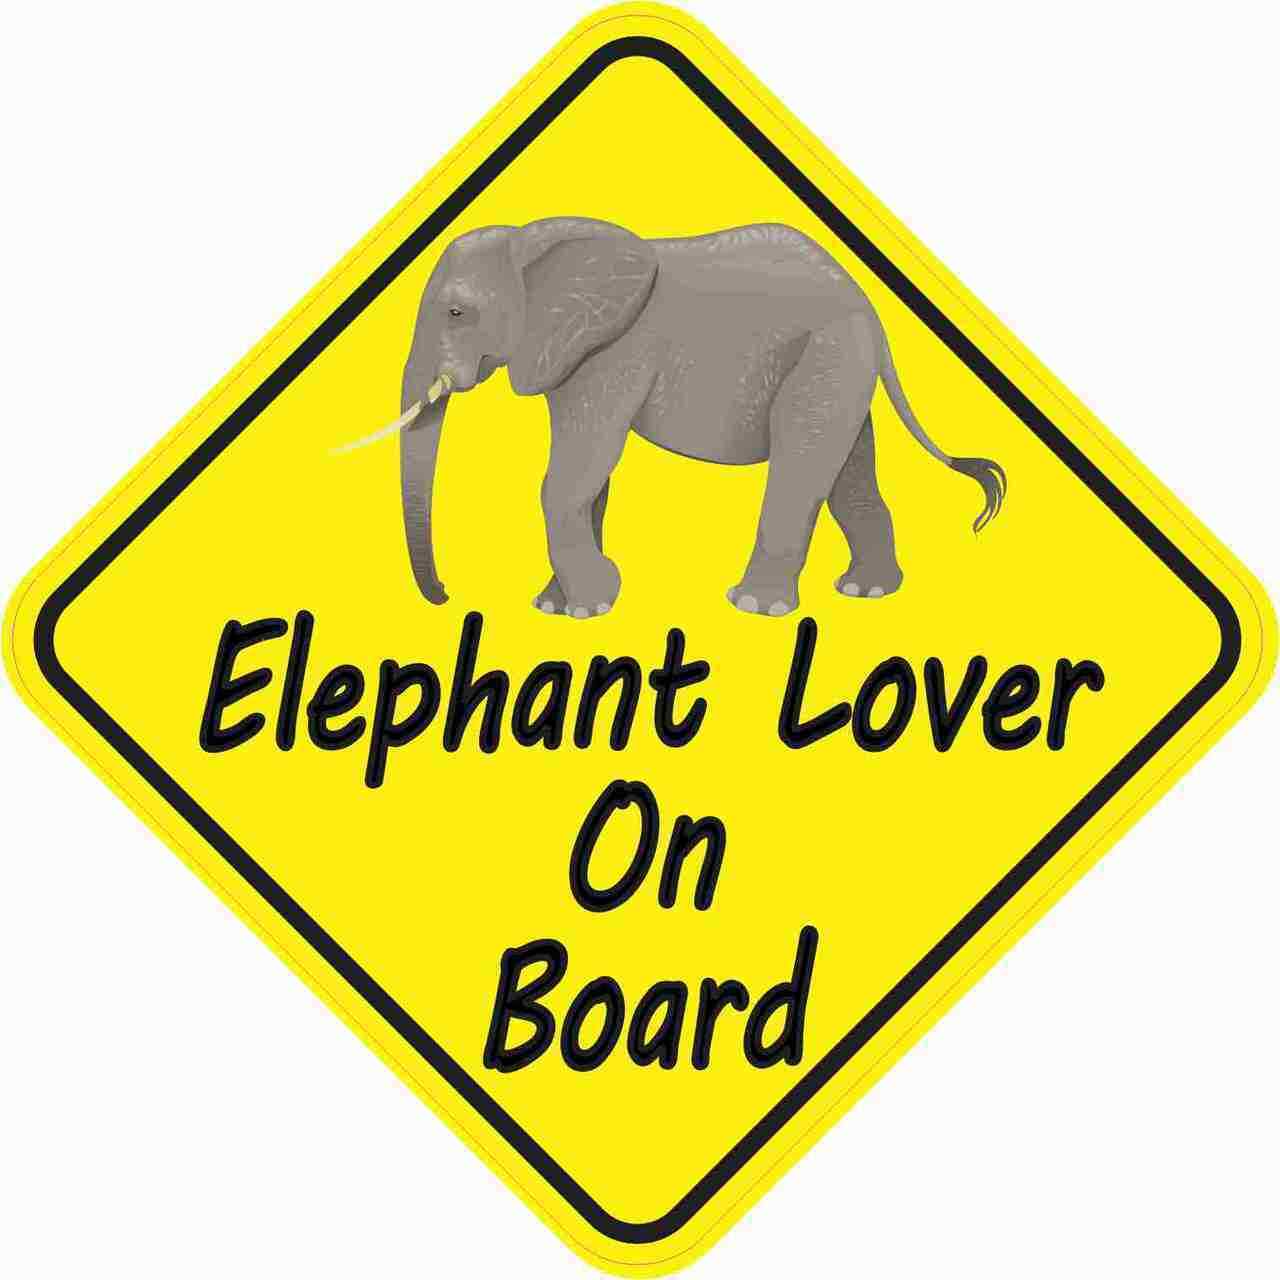 5in x 5in Elephant Lover On Board Sticker Car Truck Vehicle Bumper Decal